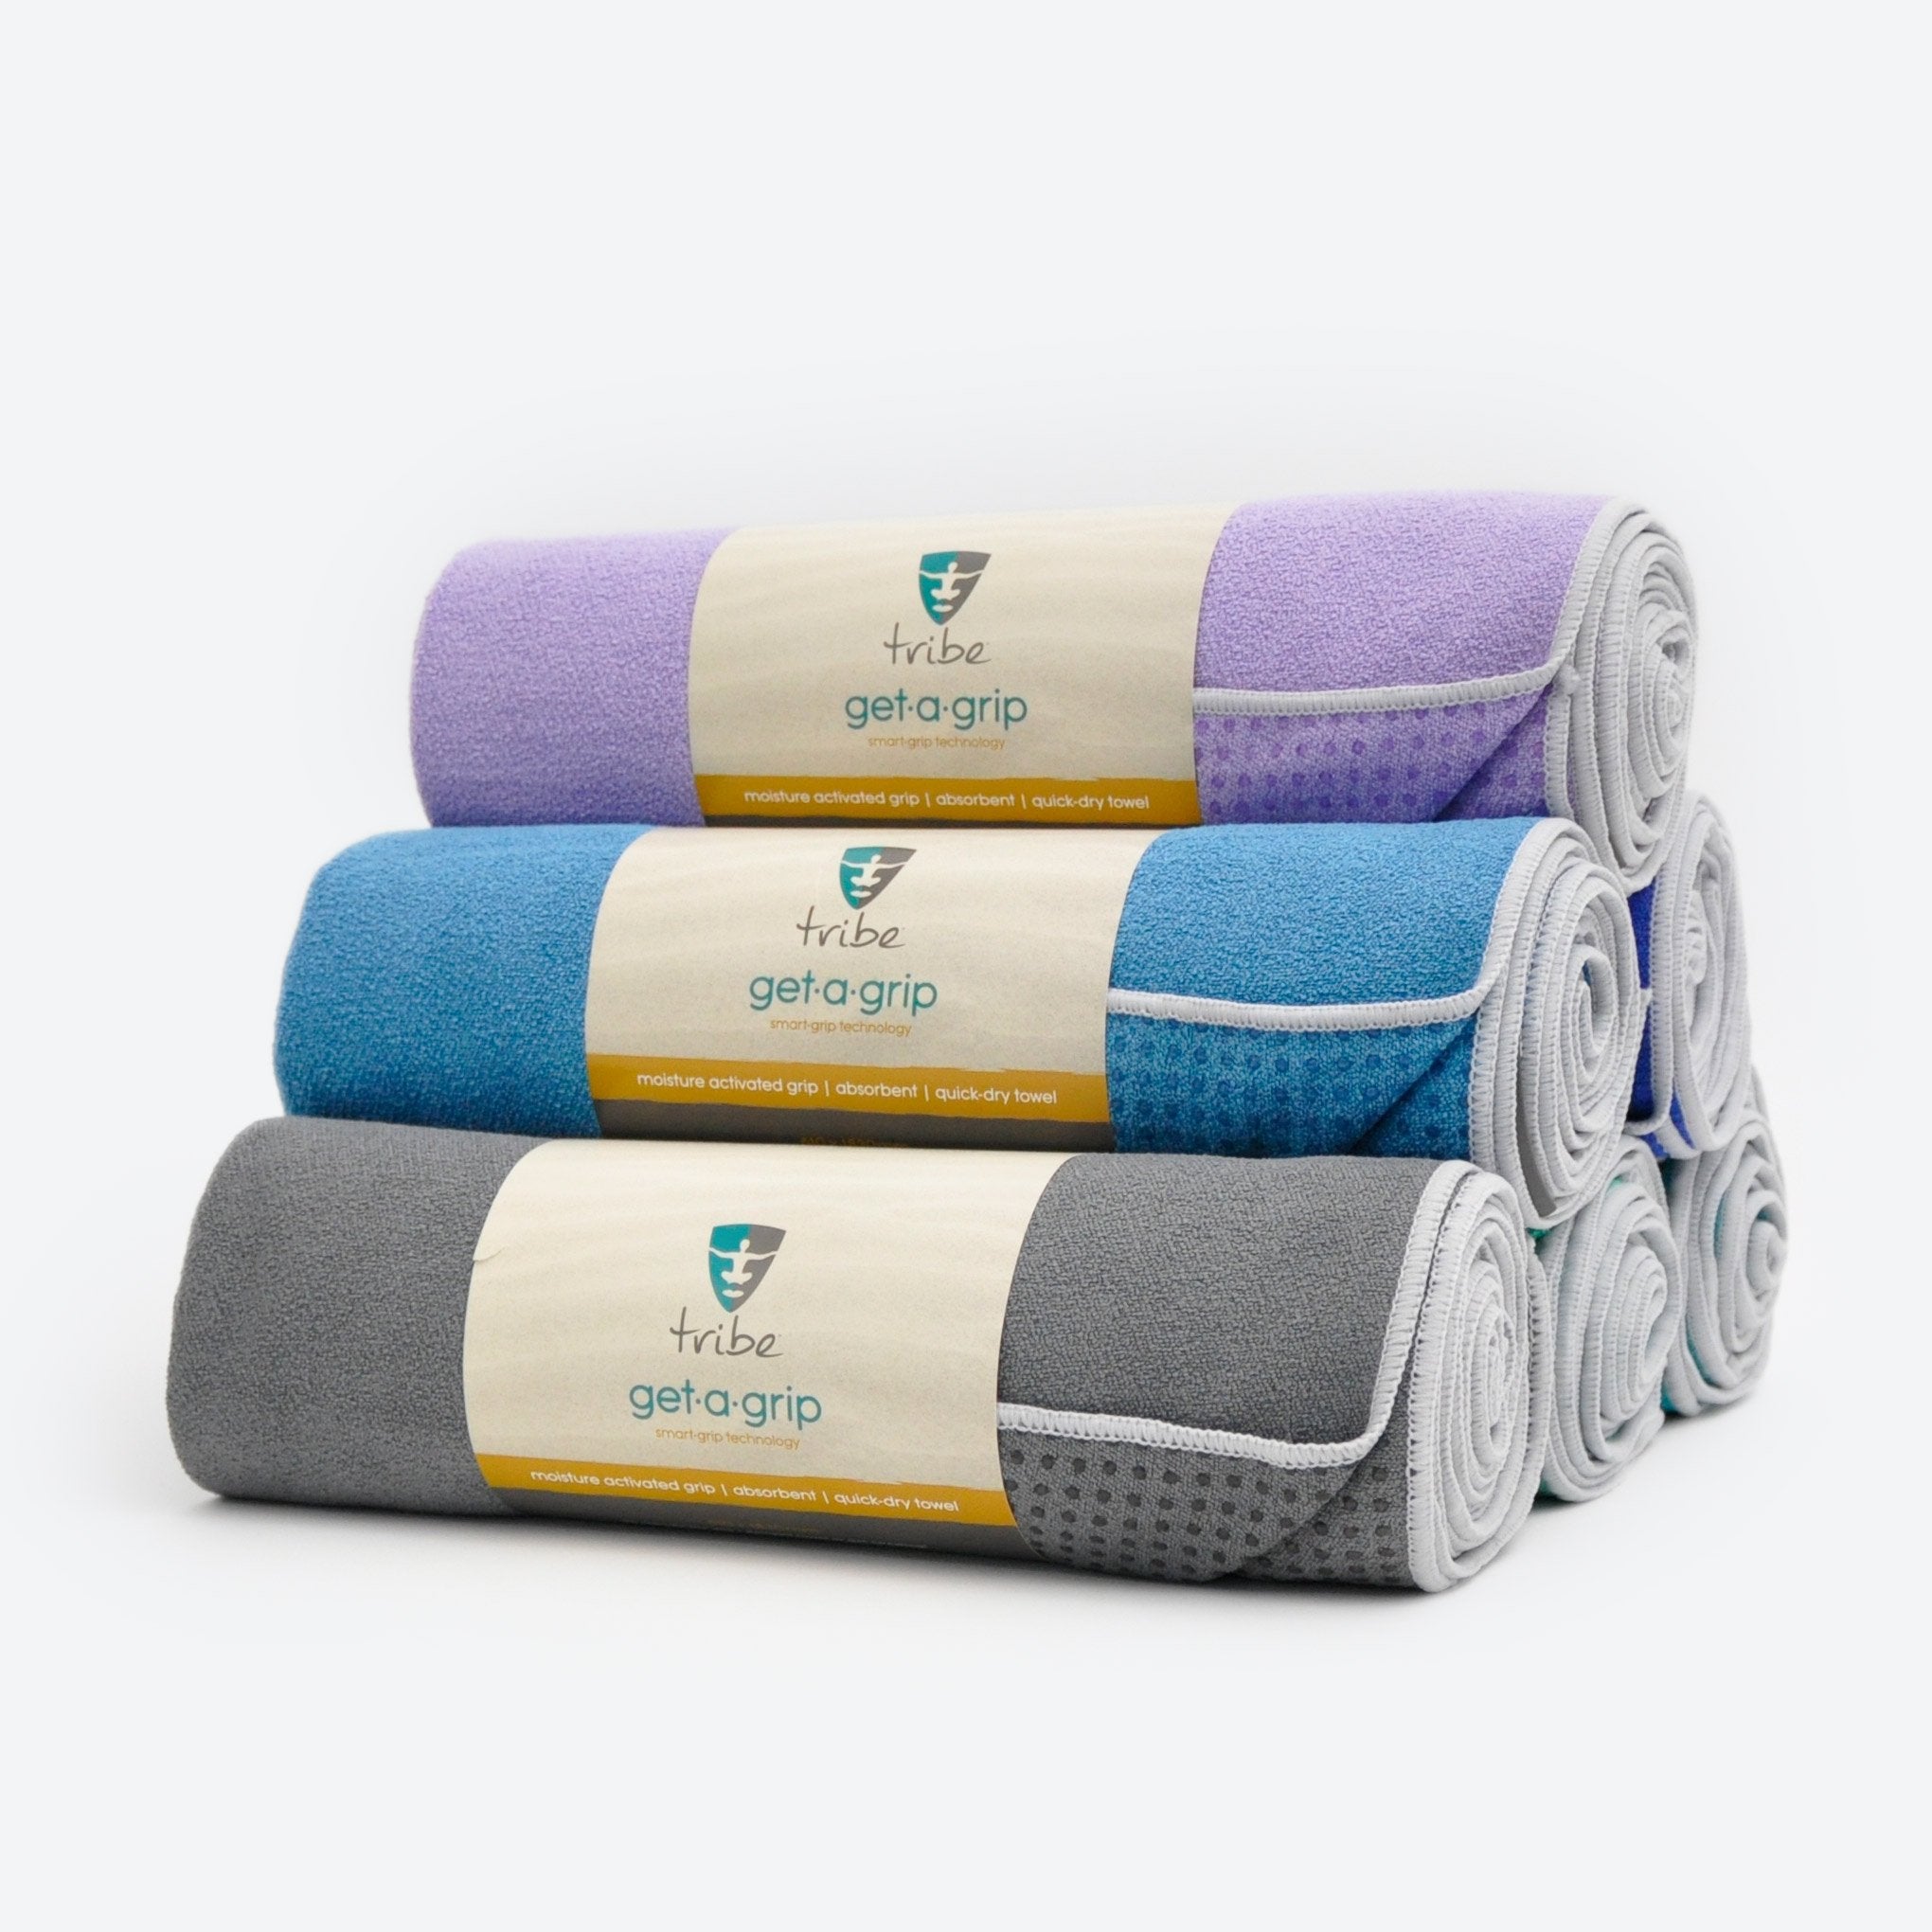 Manduka yogitoes super absorbent towel for hot or sweaty yoga